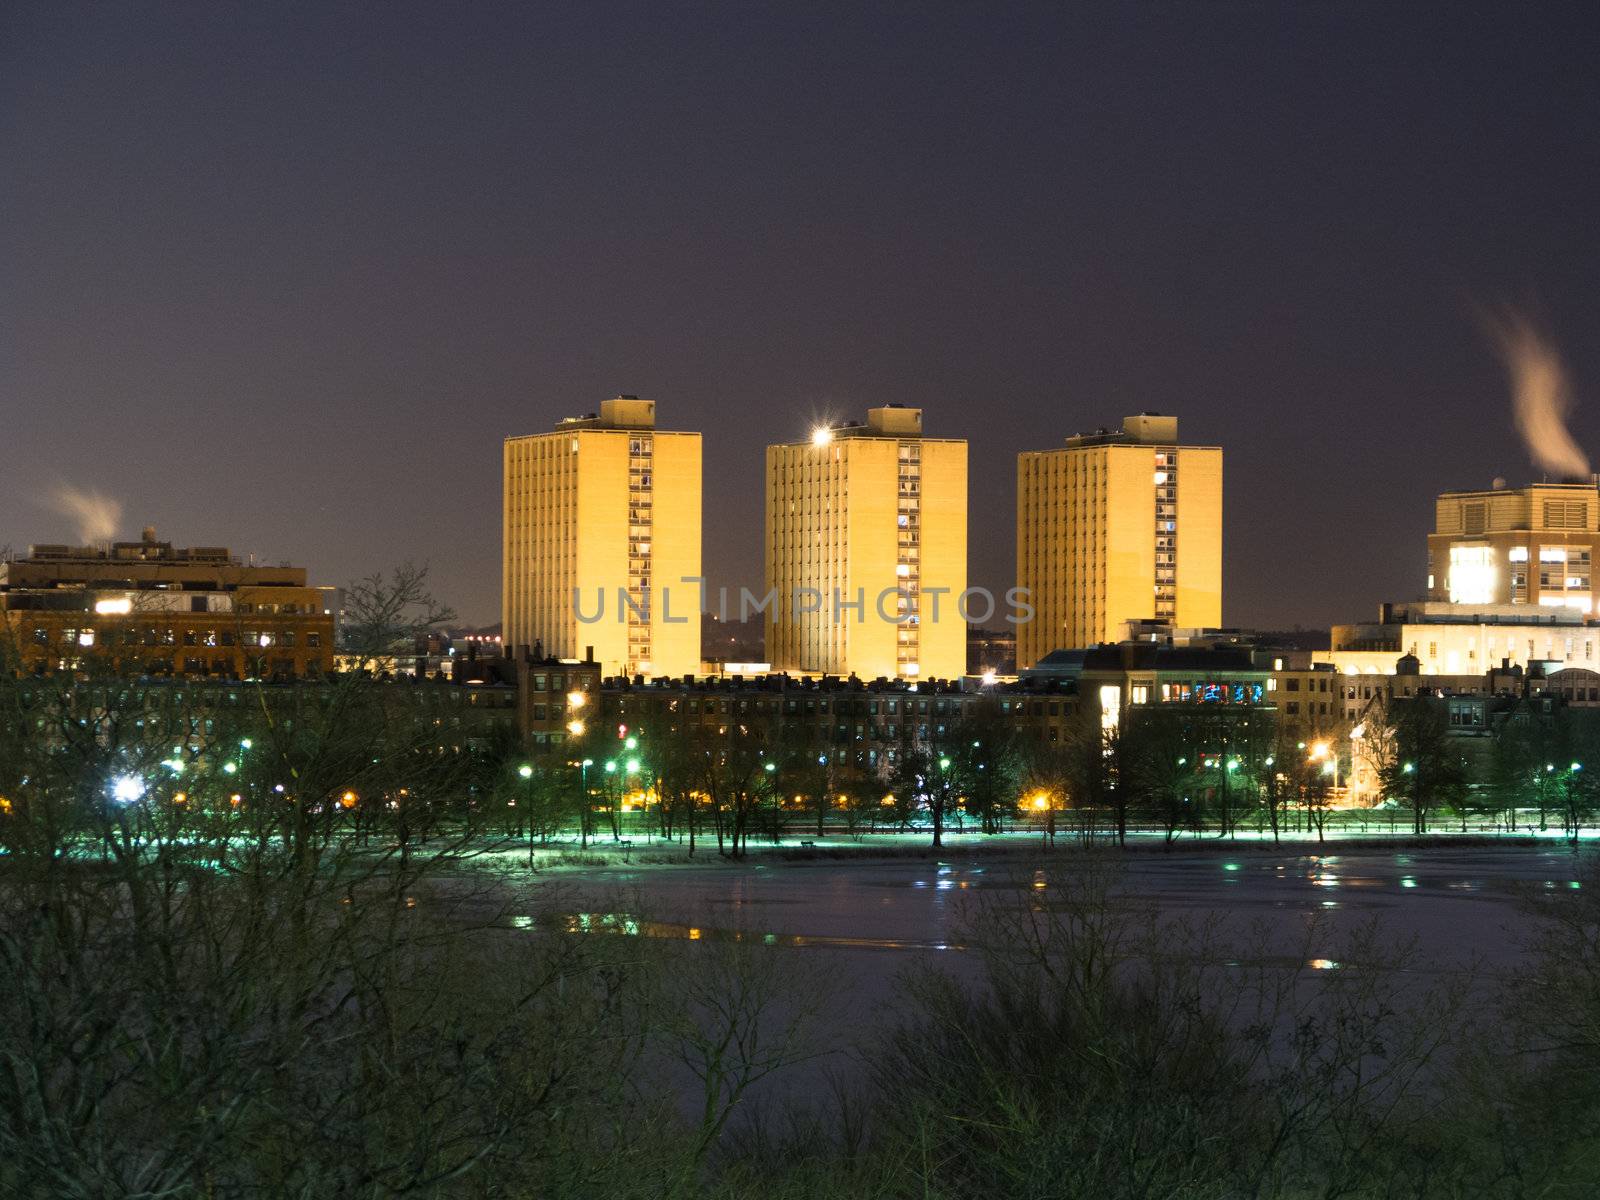 Boston University's Warren Towers dormitory at dusk